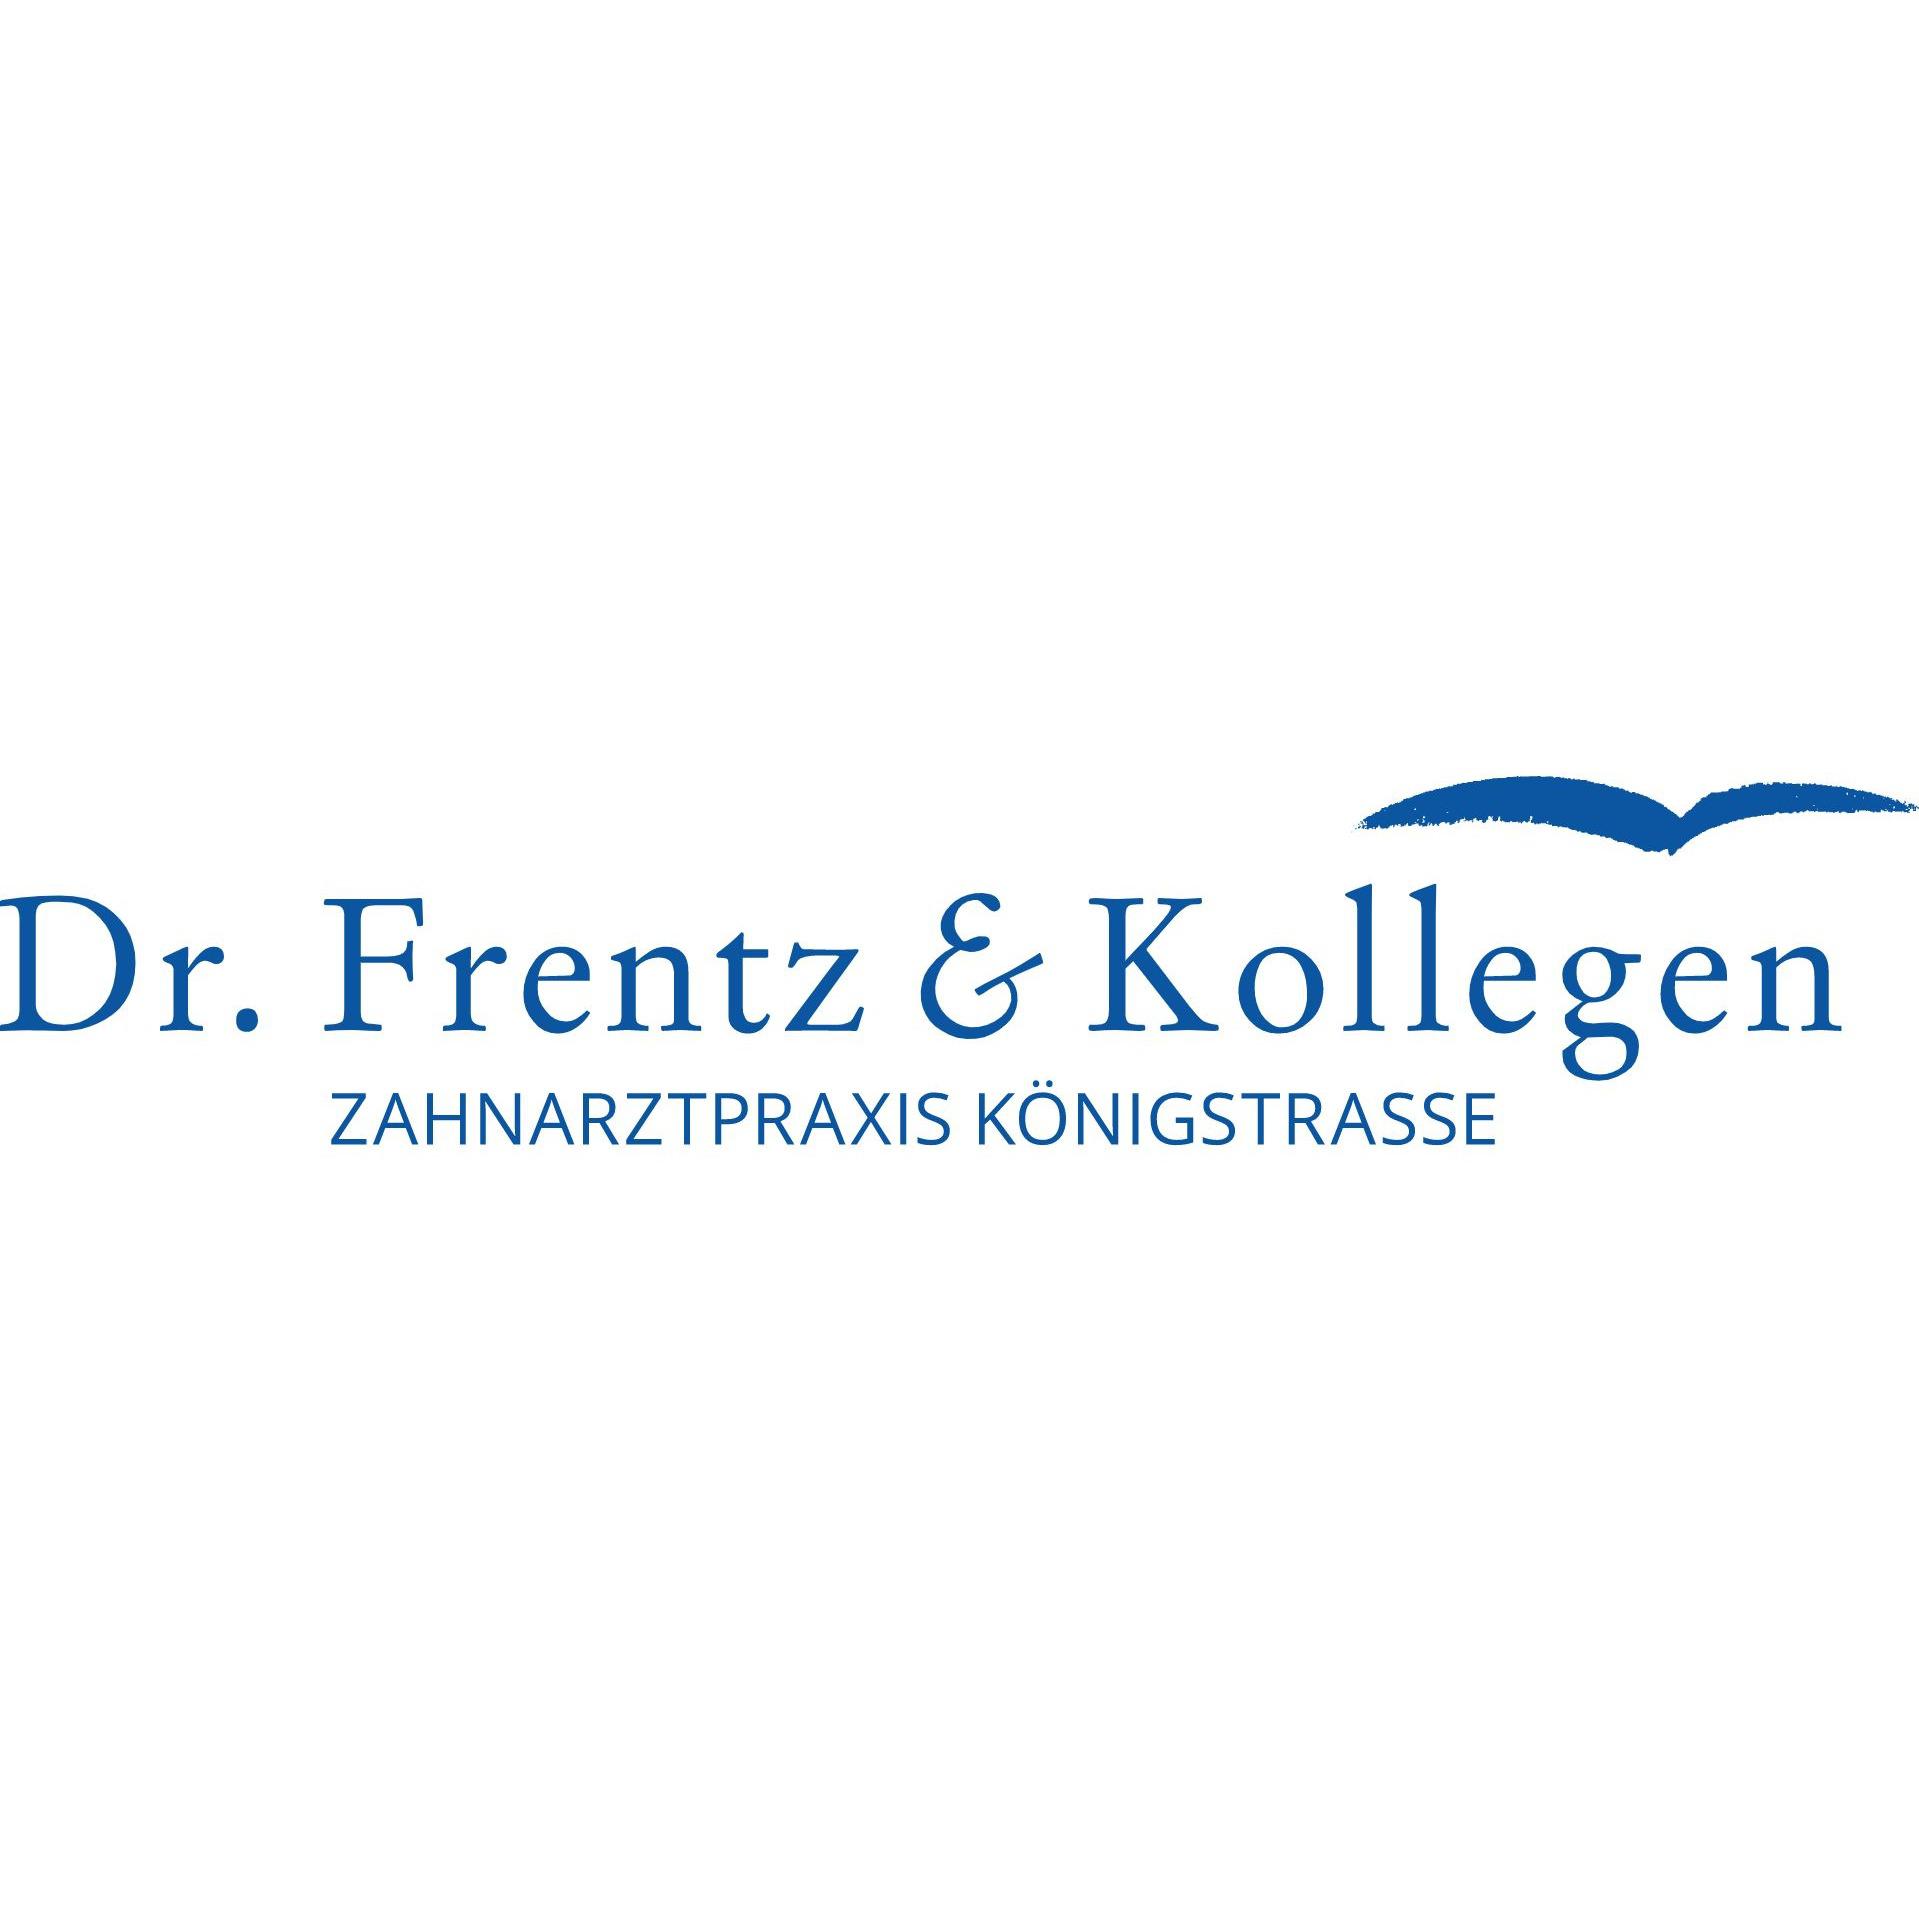 Zahnarztpraxis Dr. Frentz & Kollegen in Stuttgart - Logo